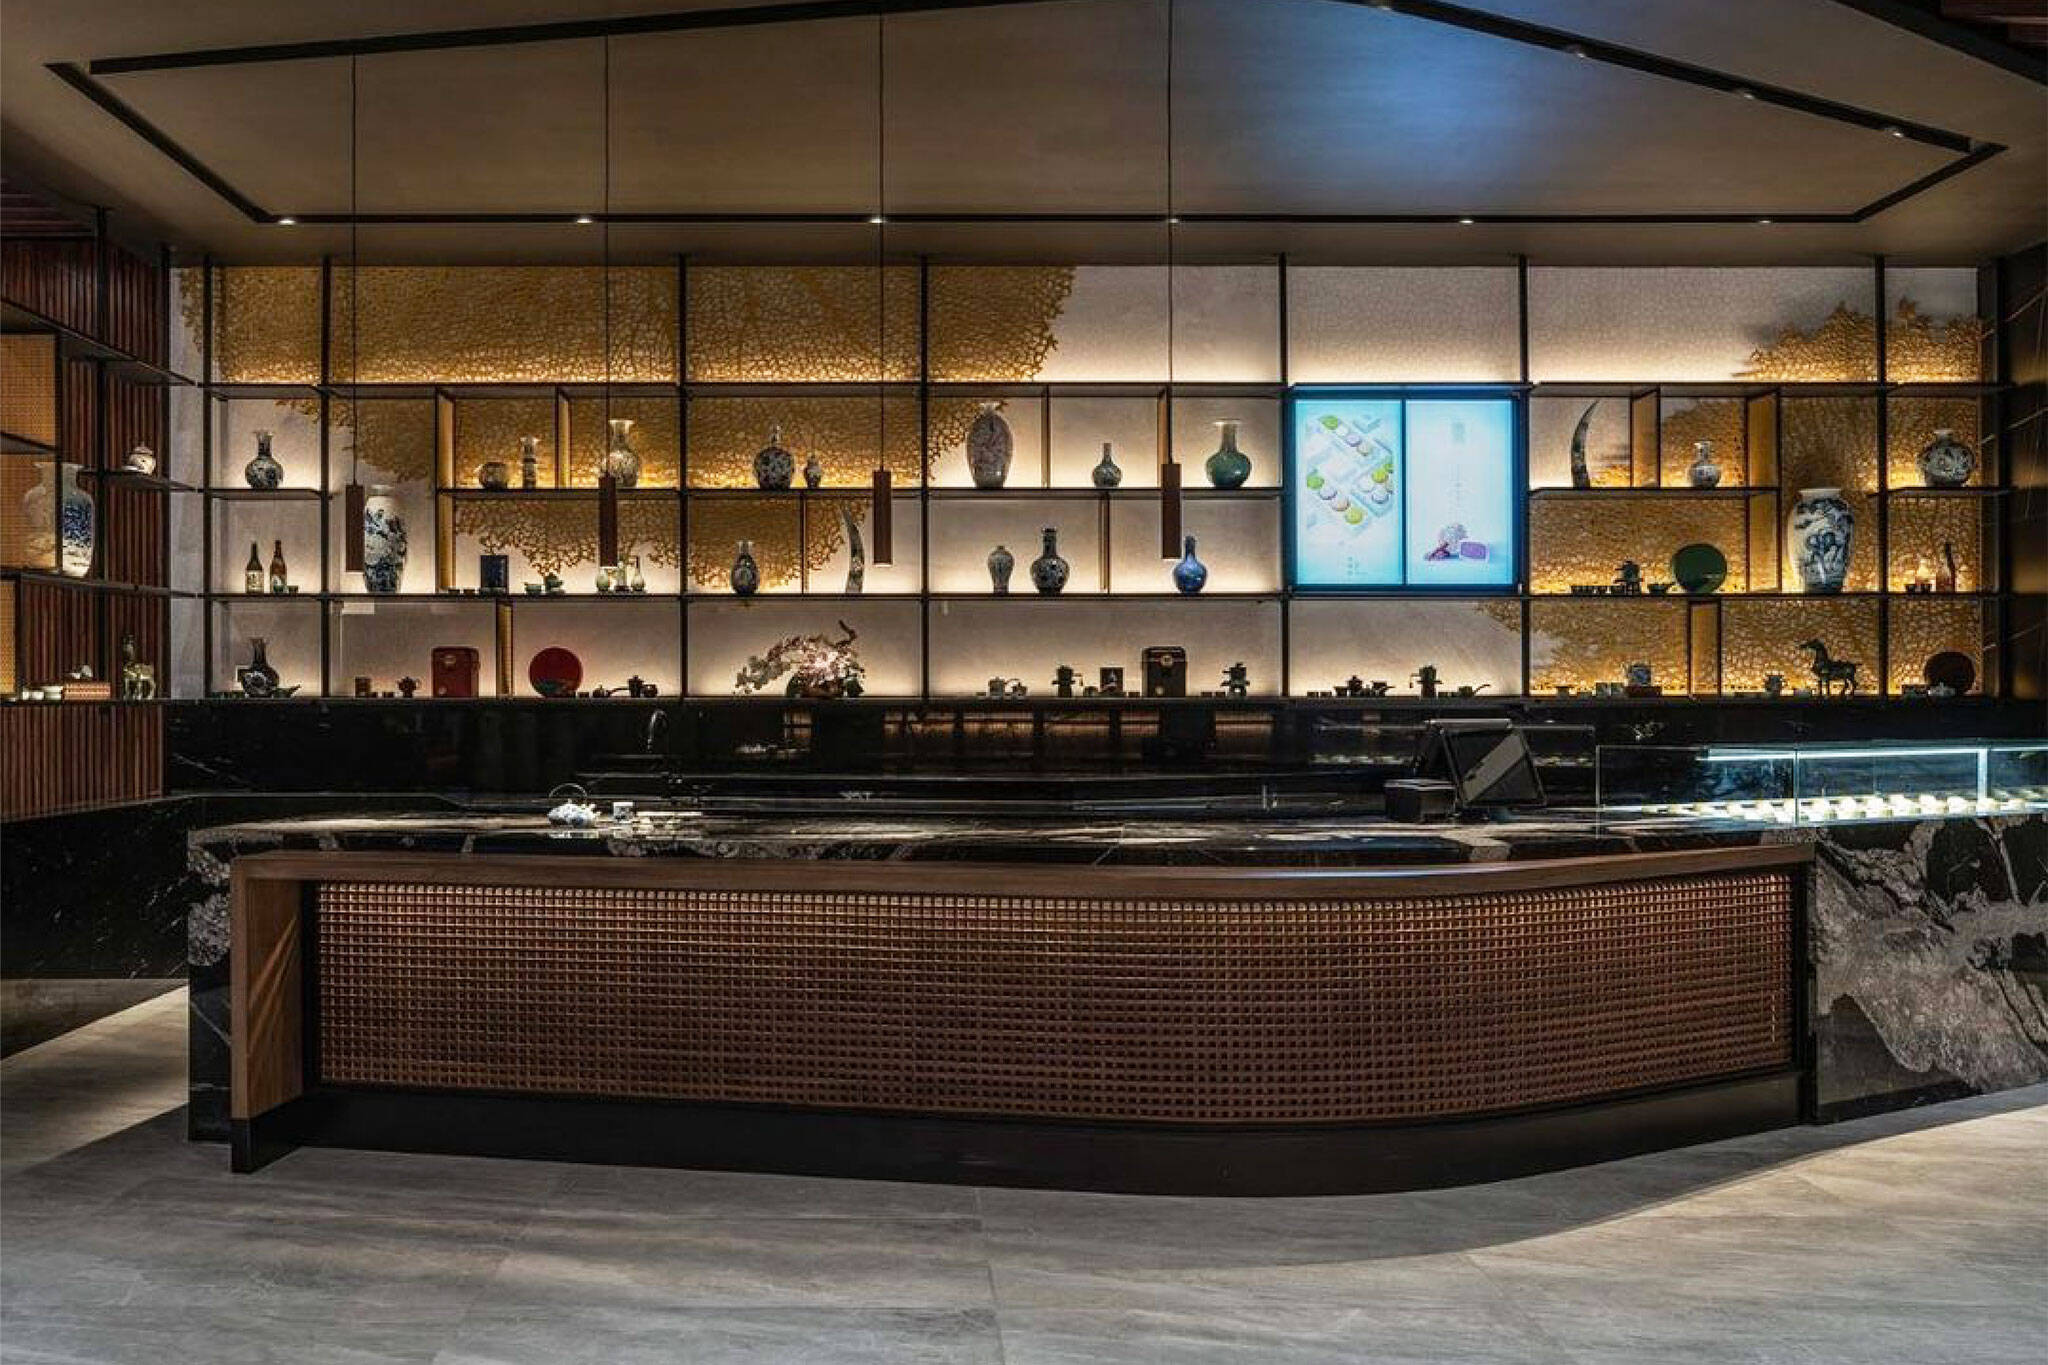 Louis Vuitton Opens Impressive Yorkdale Flagship Store in Toronto [Photos]